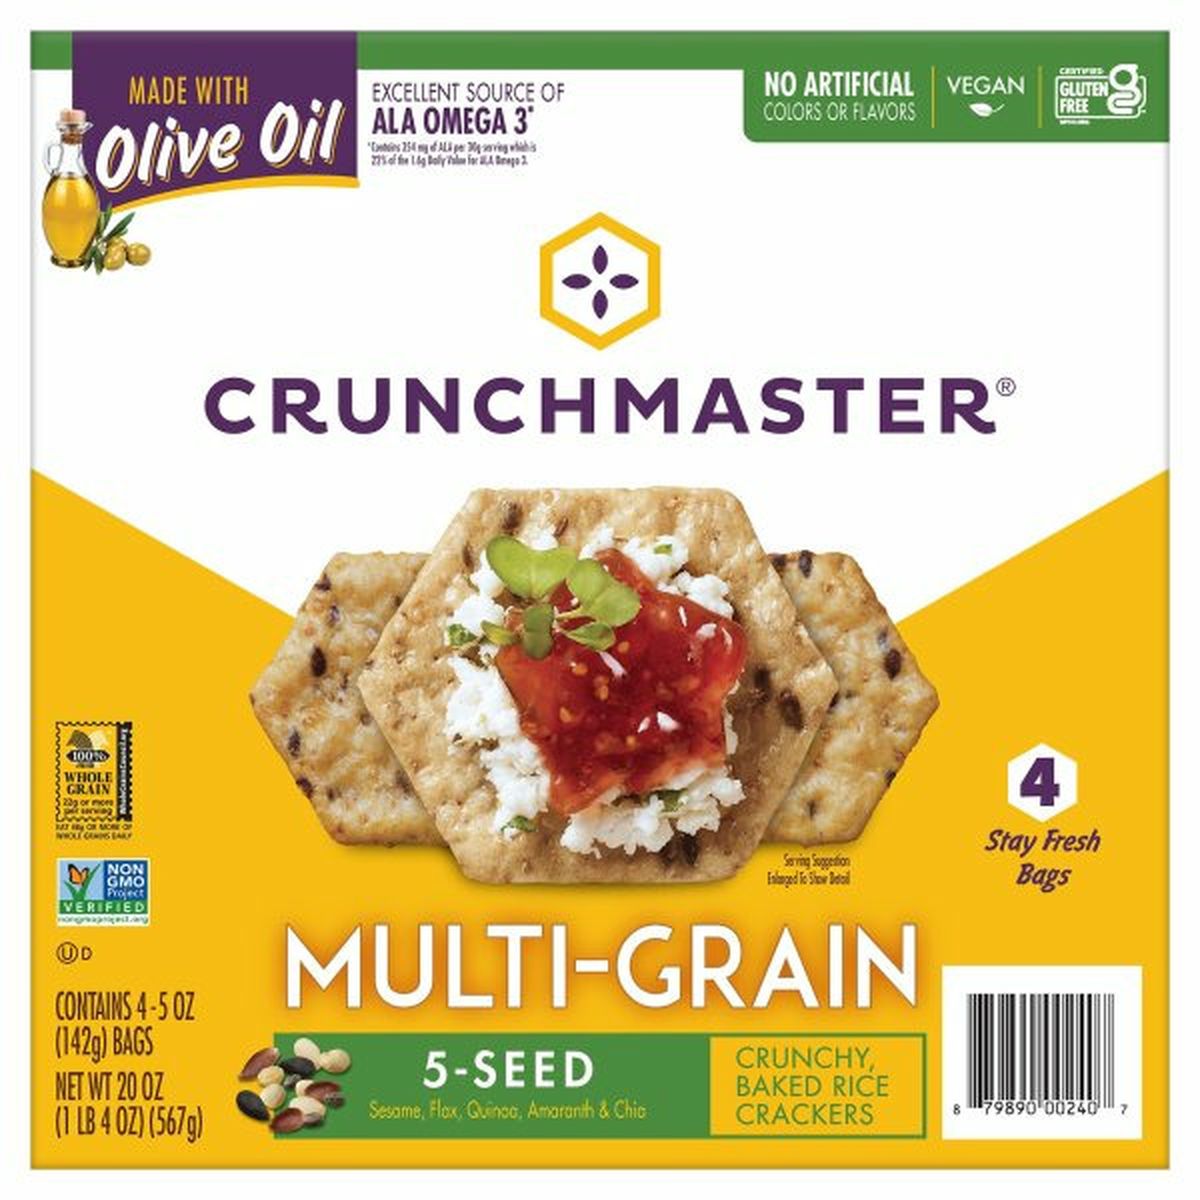 Calories in Crunchmaster Crackers, 5-Seed, Multi-Grain